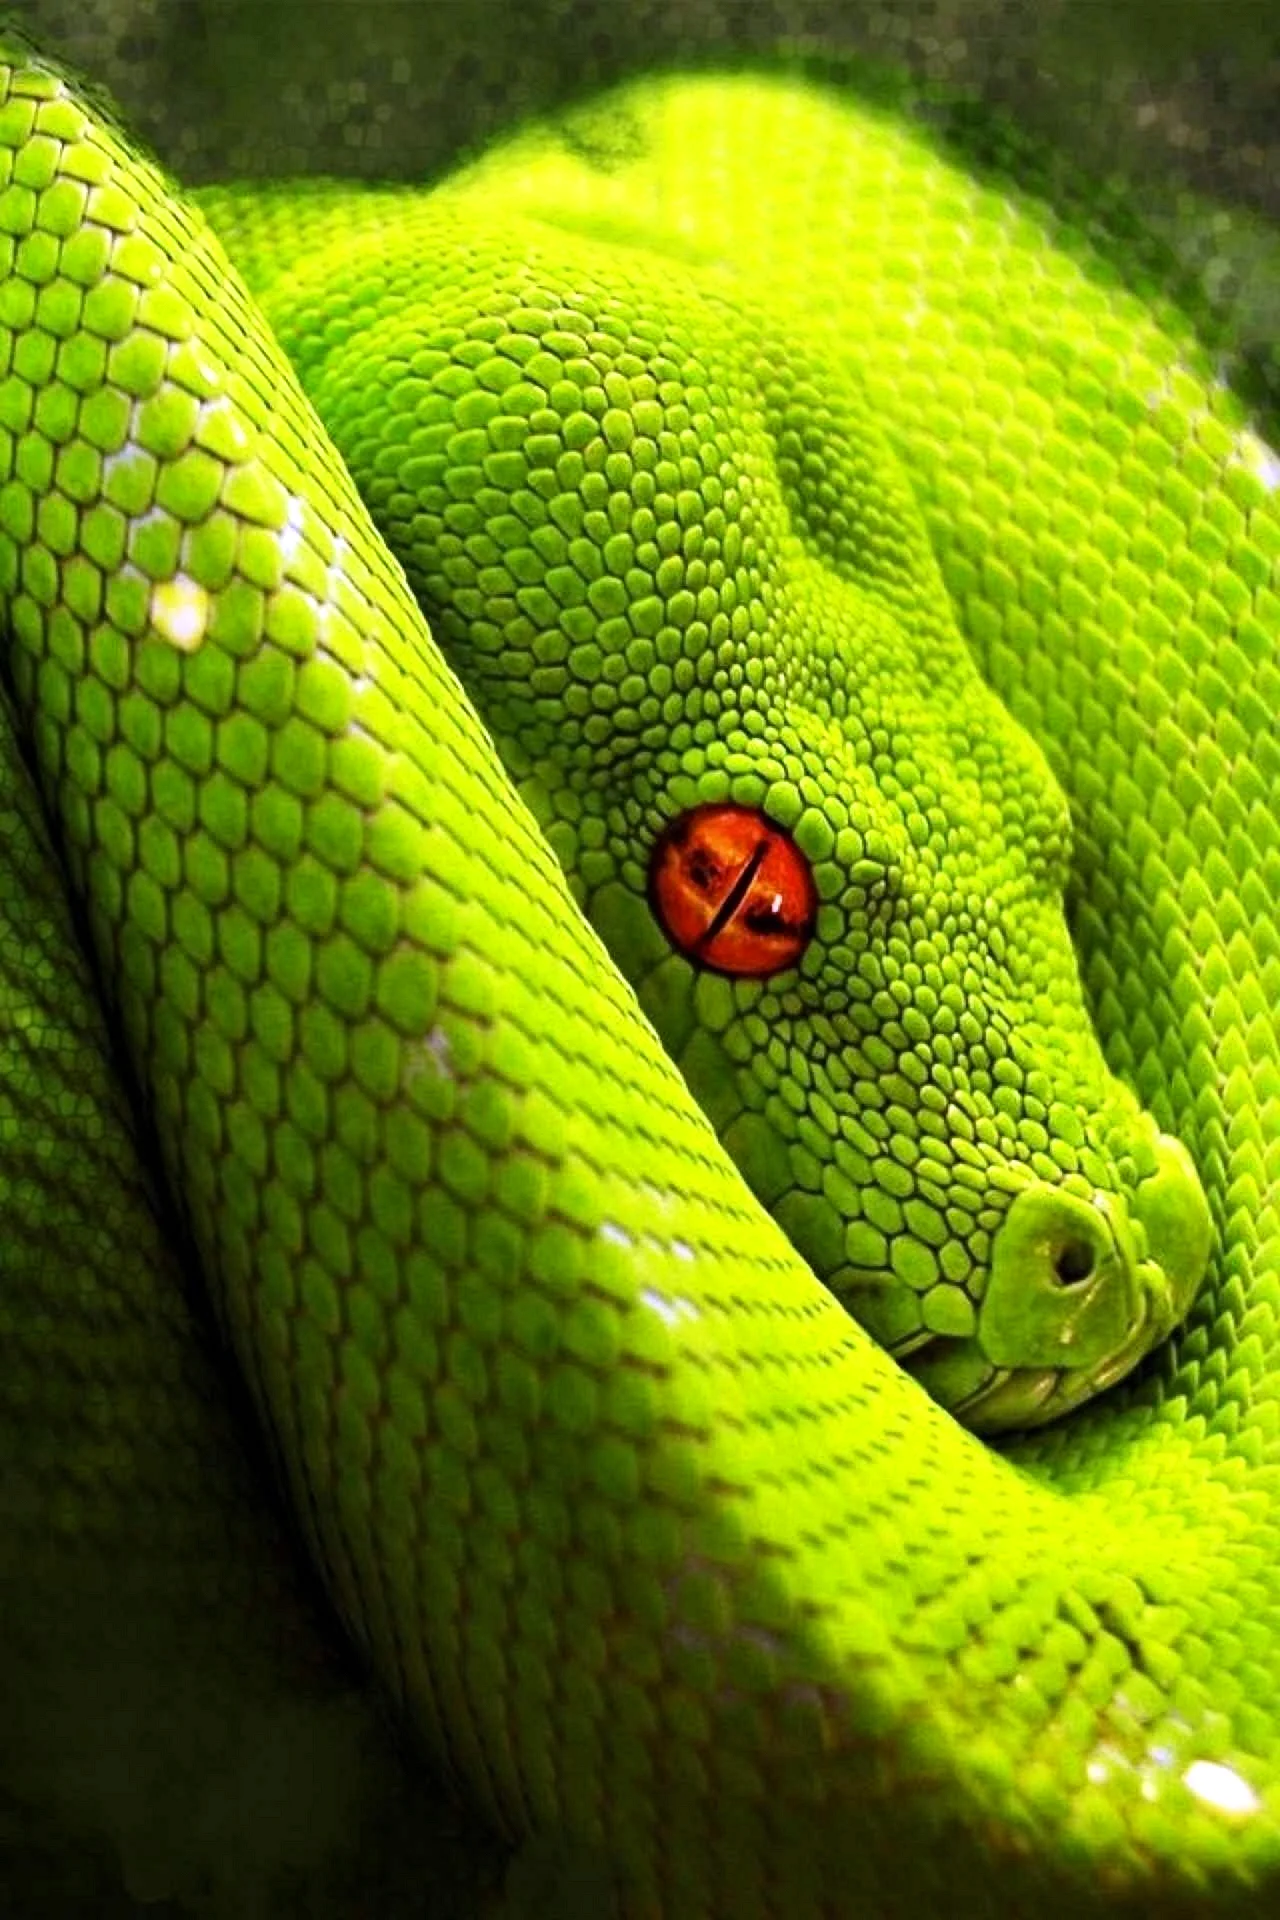 Green Snake Wallpaper For iPhone